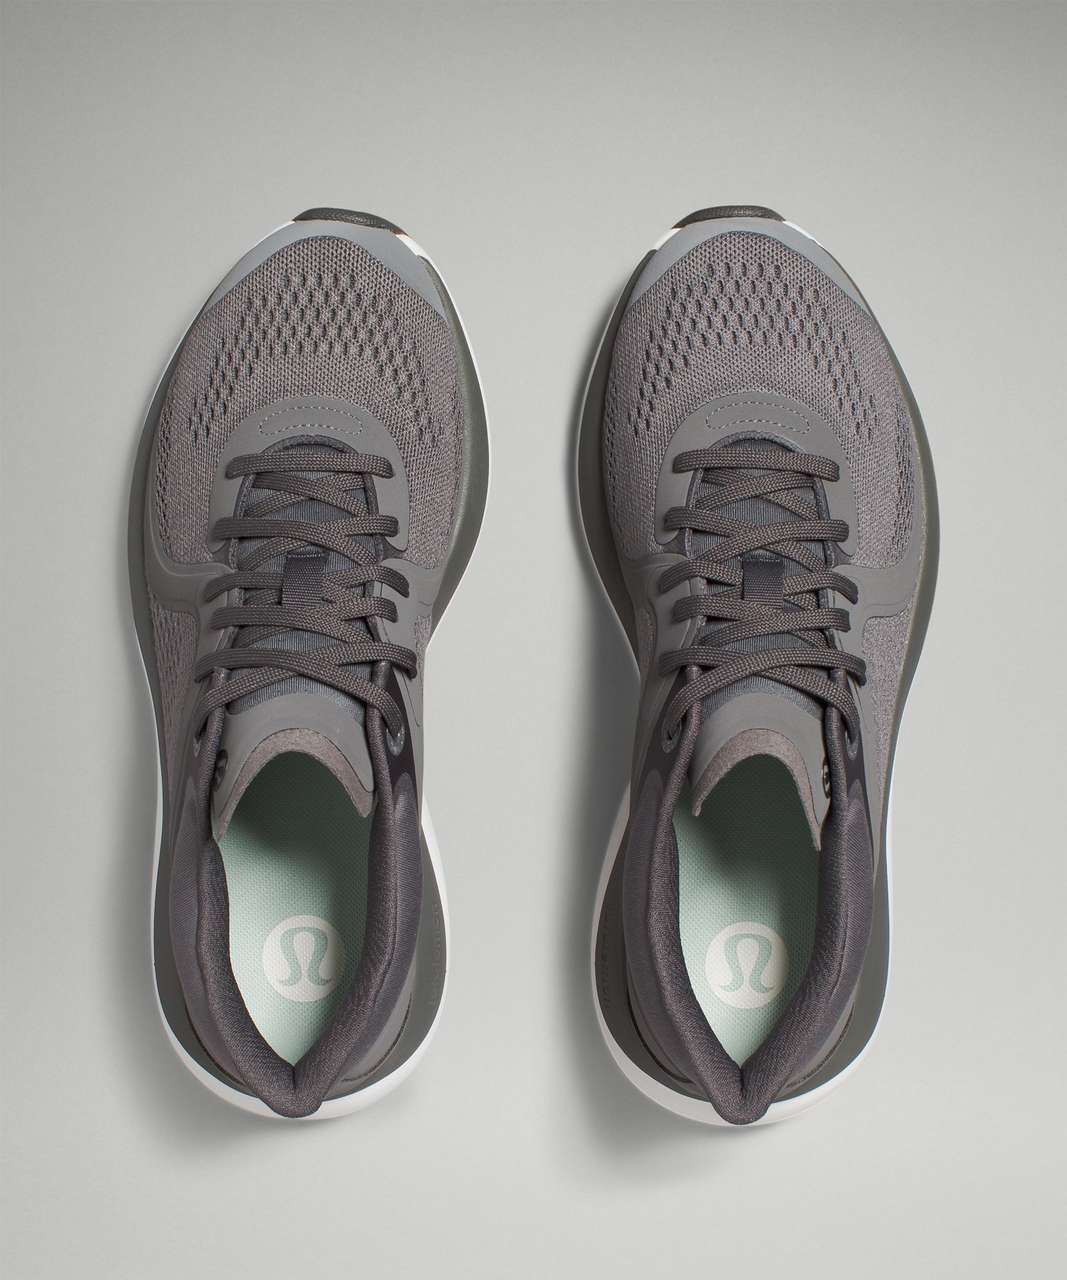 Lululemon Chargefeel Low Womens Workout Shoe - Asphalt / Graphite Grey / White